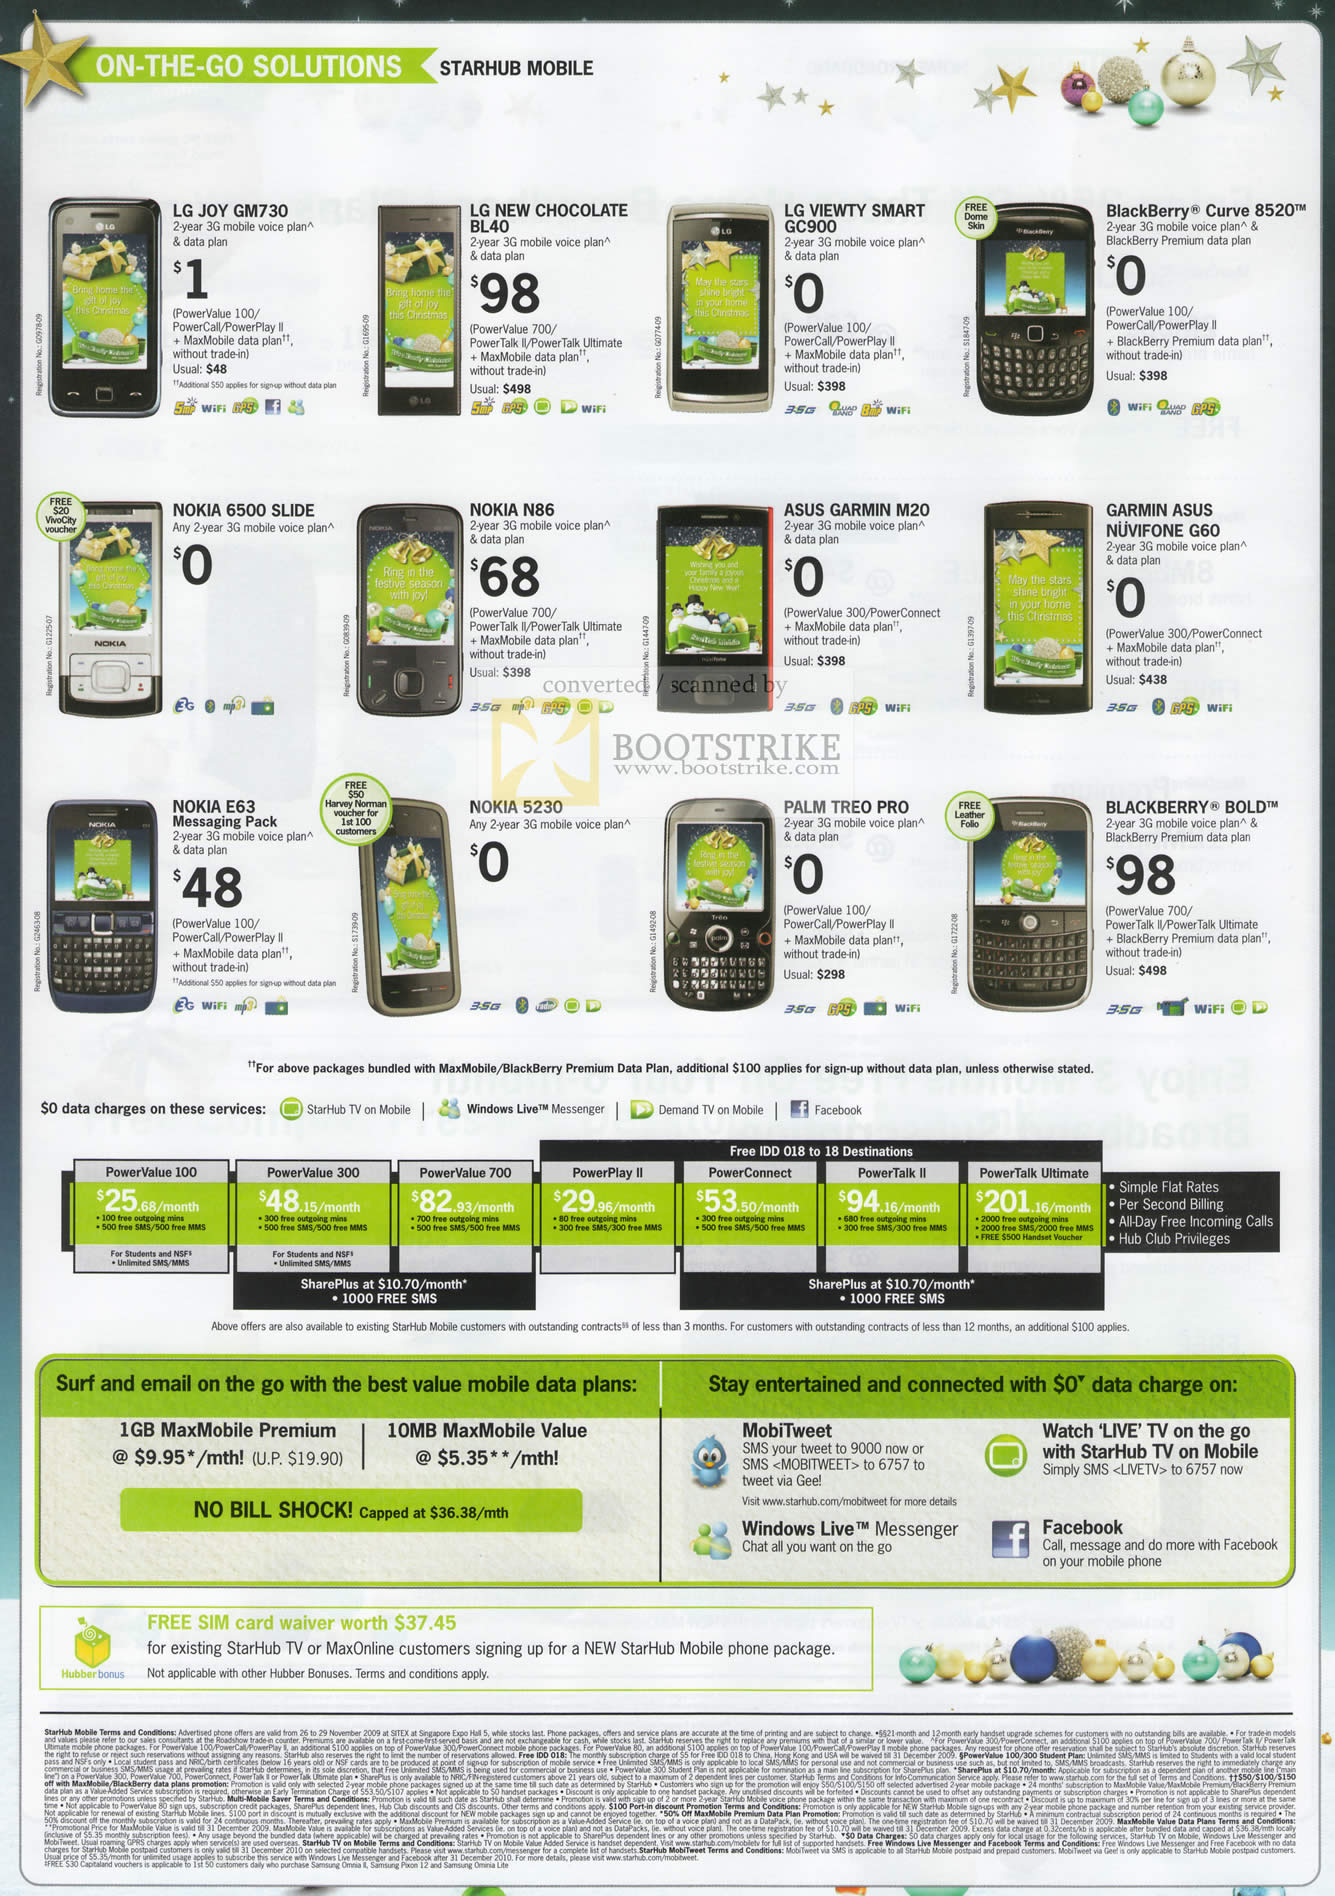 Sitex 2009 price list image brochure of Starhub Mobile Phones LG Nokia ASUS Garmin Palm Blackberry